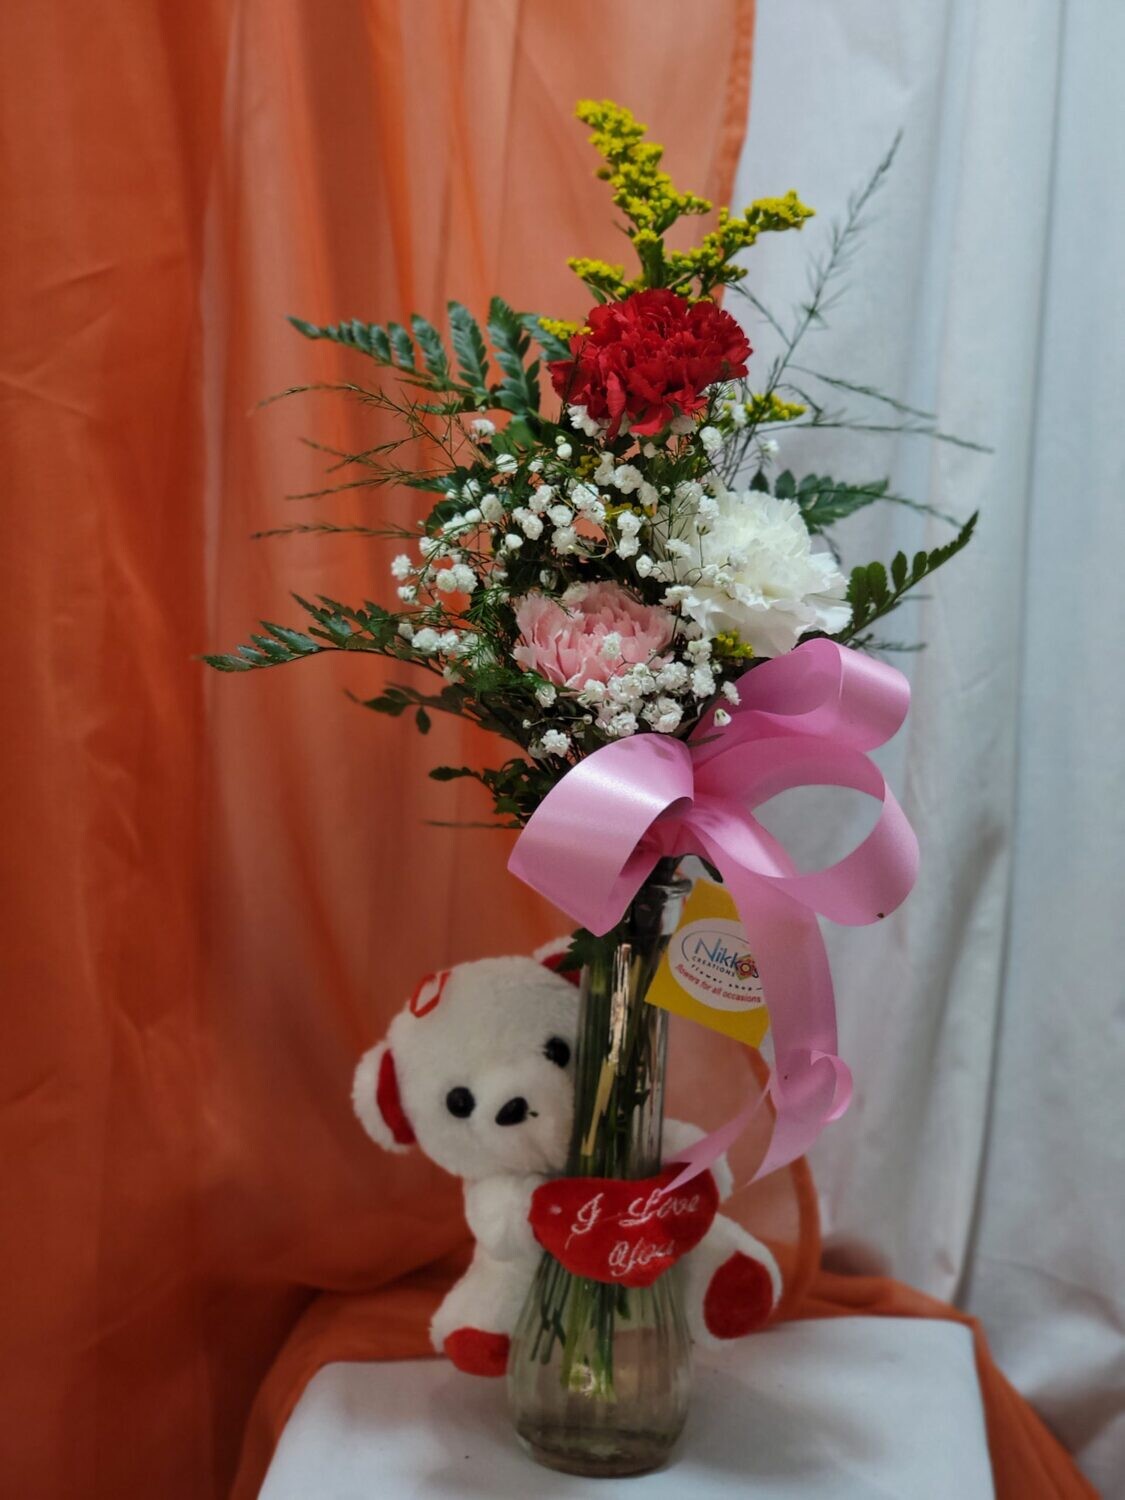 1 Red, 1 Pink, 1 White Carnation, sm Teddy